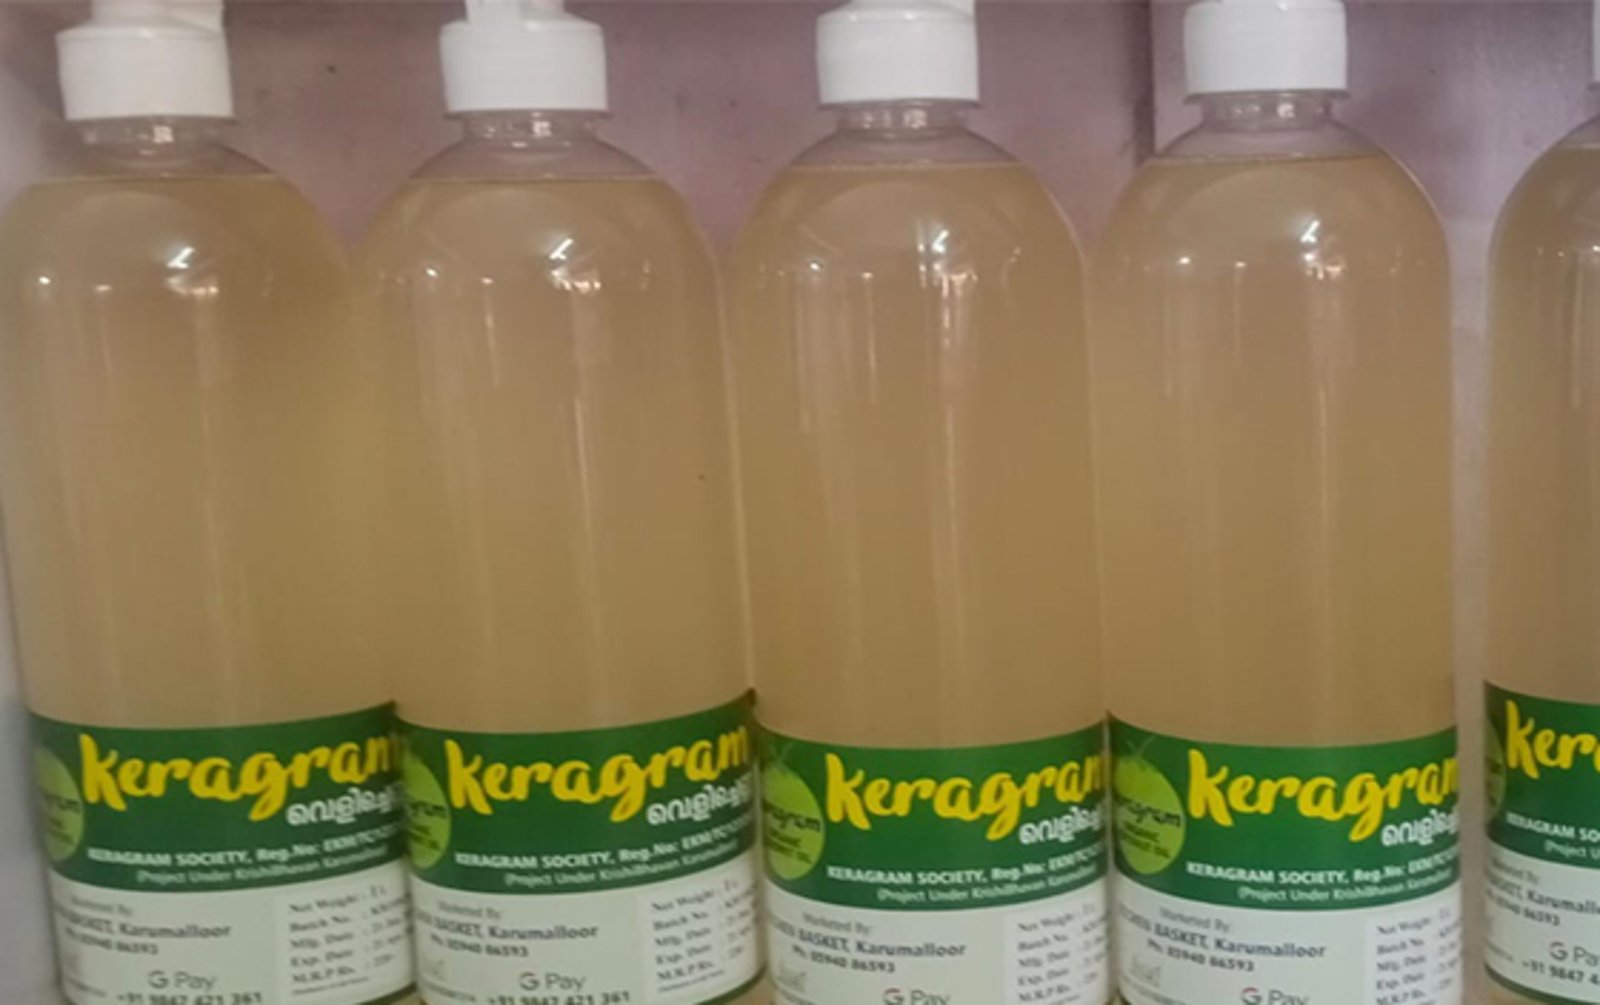 Karumallur's 'keragram' coconut oil market